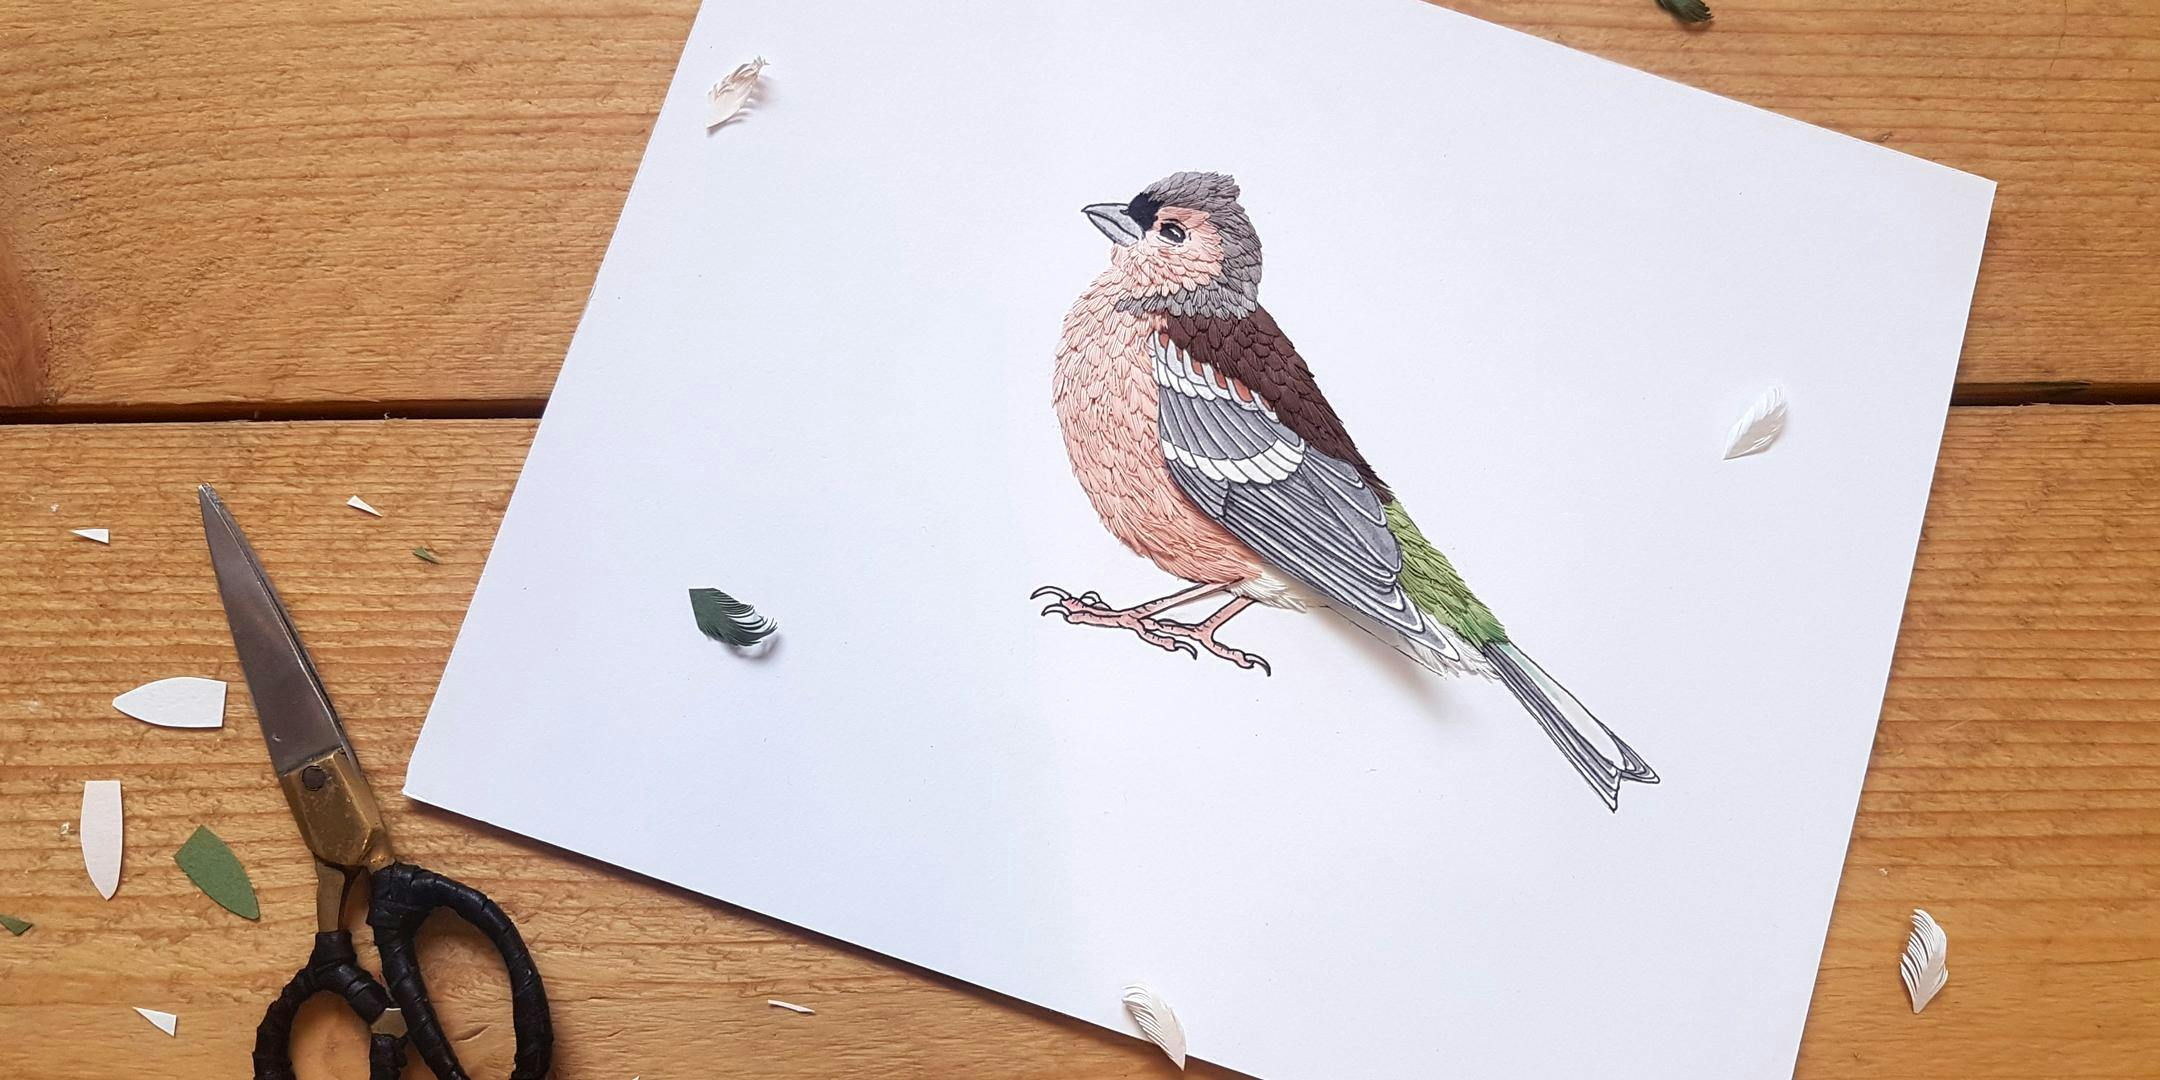 Paper Bird Making Workshop with Zack Mclaughlin